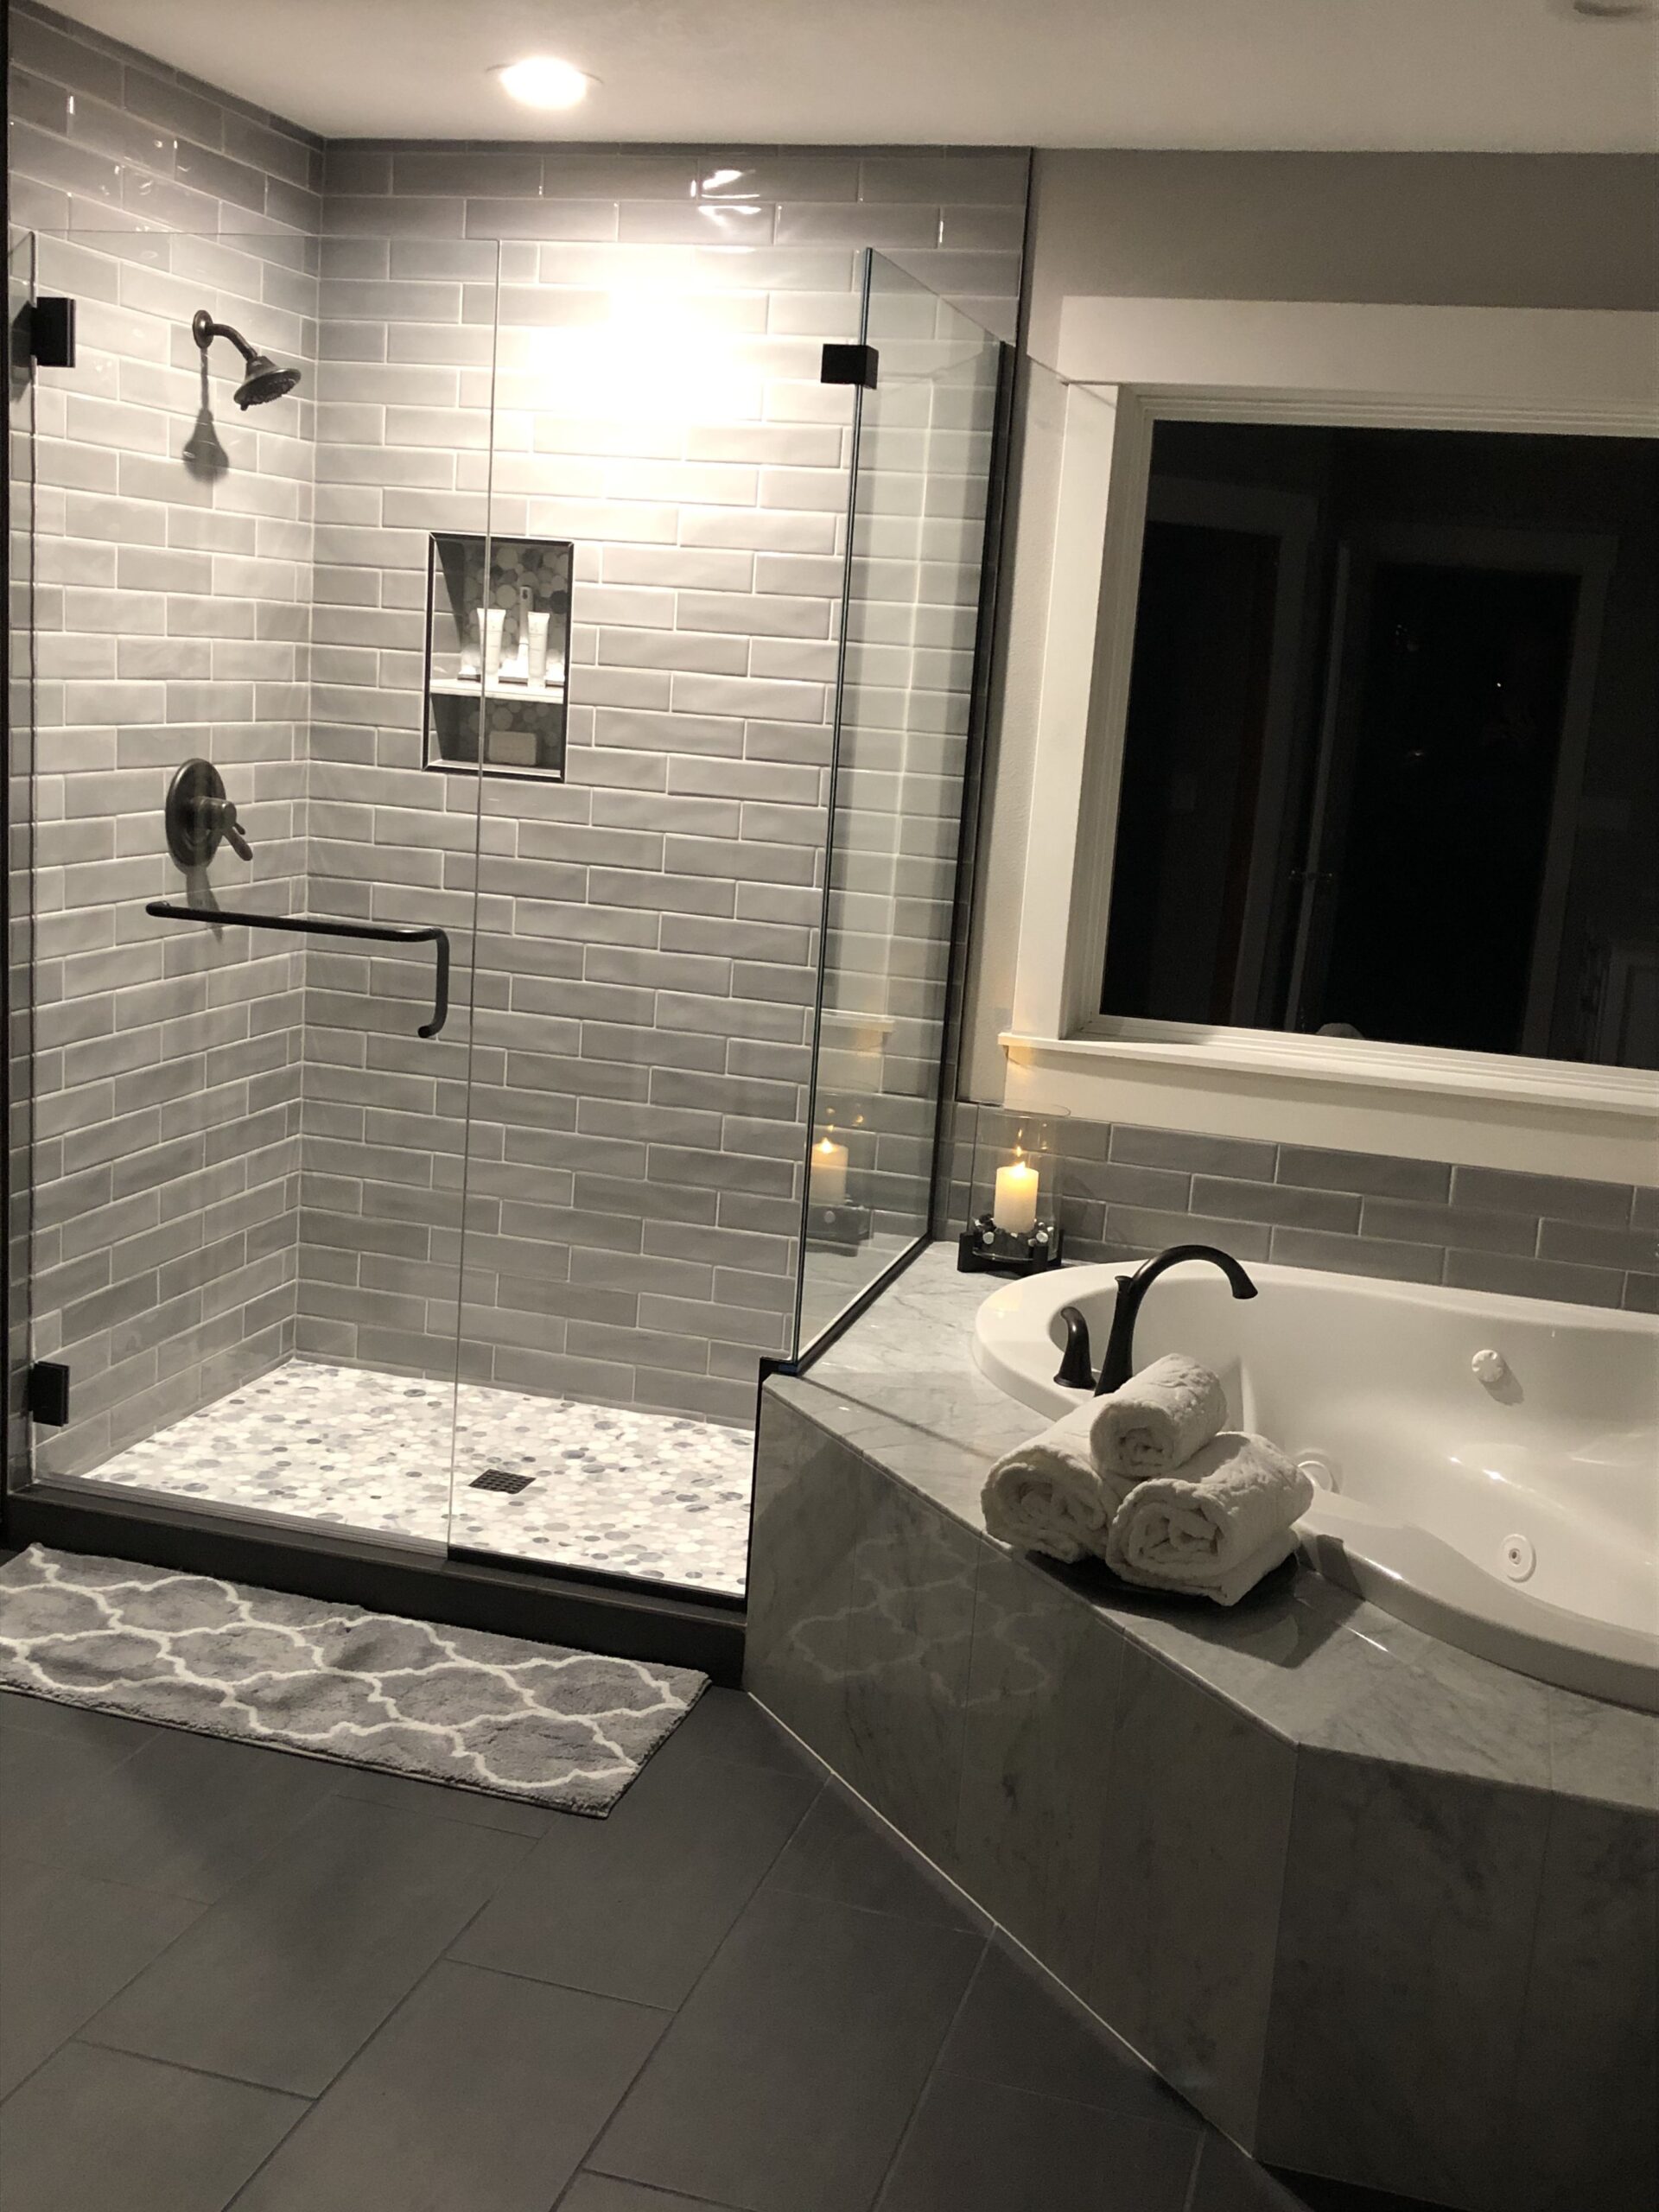 Decorating your bathroom with corner  baths